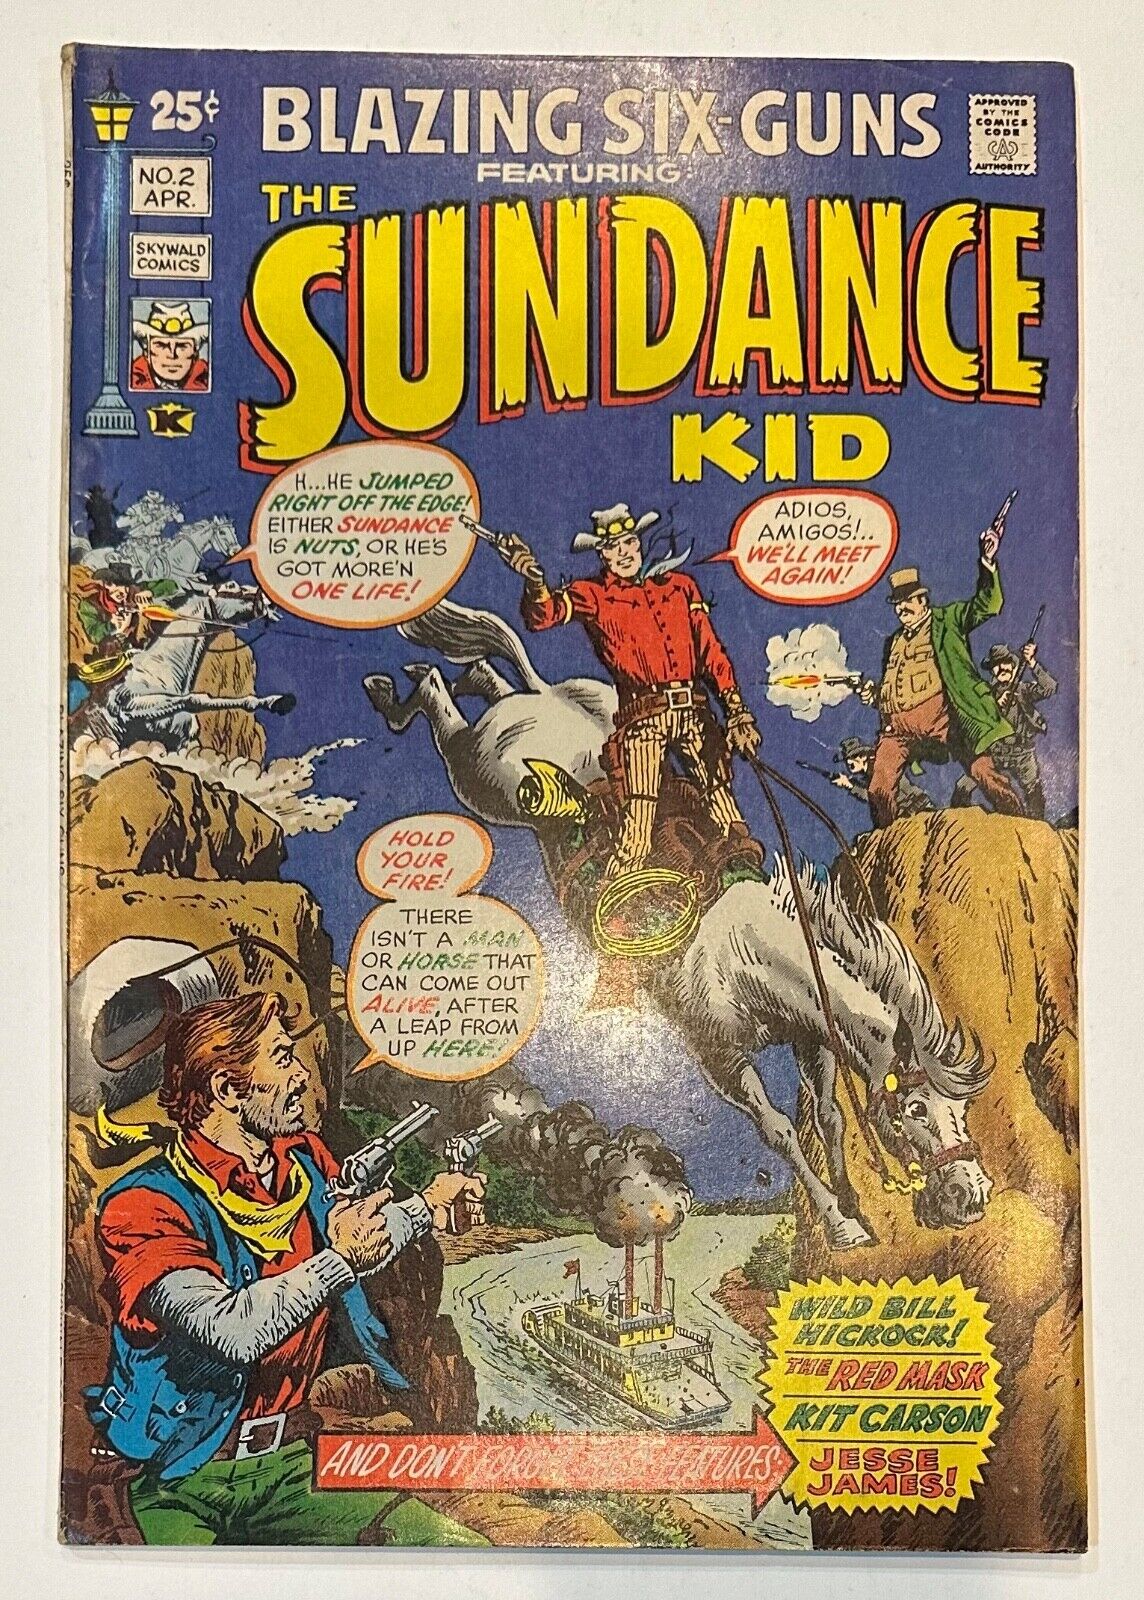 (1971) Skywald Comics Blazing Six Guns #2 Sundance Kid Kit Carson Red Mask